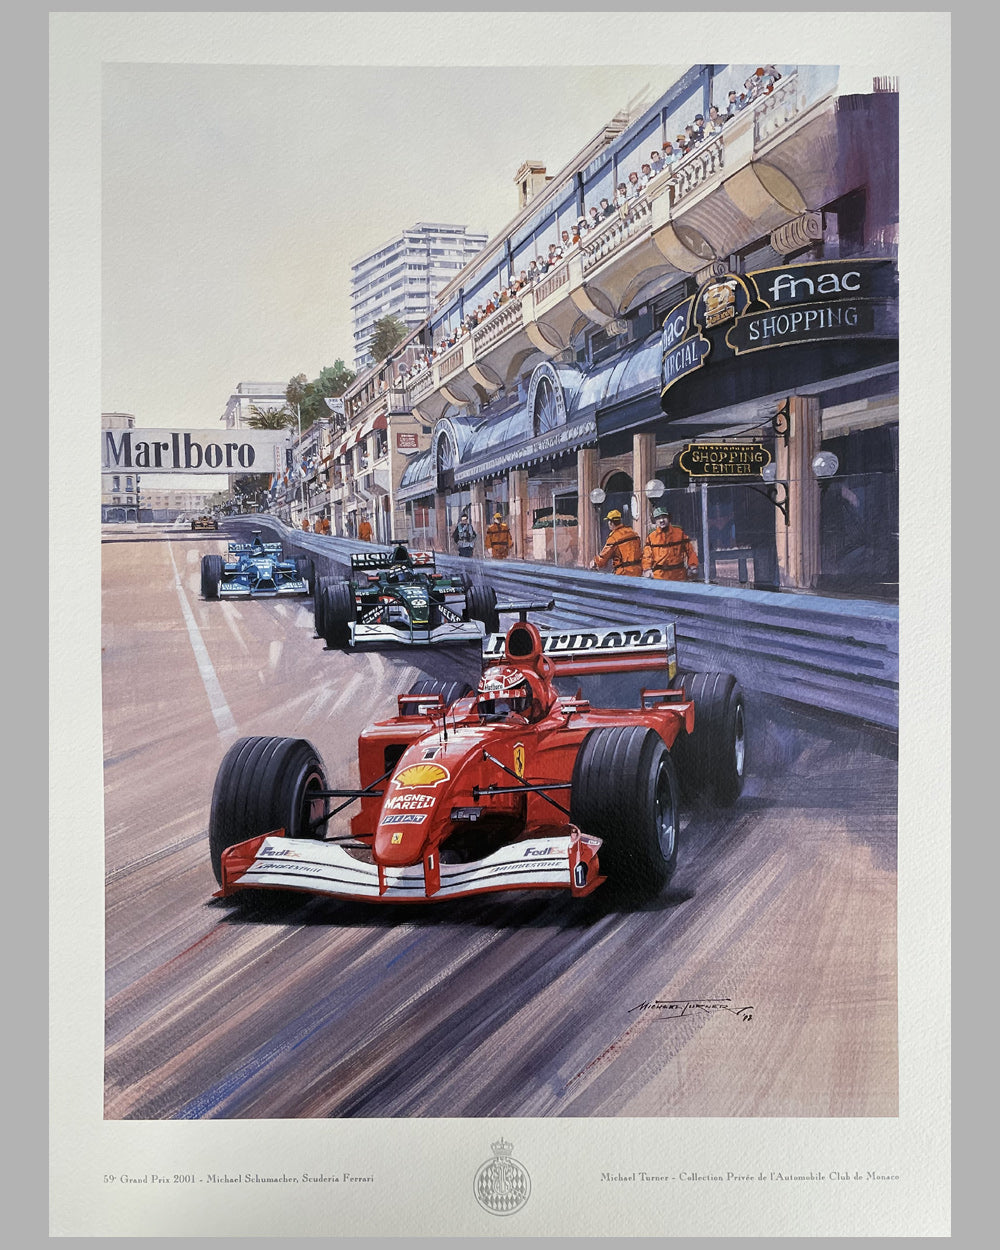 Grand Prix of Monaco 2001 print by Michael Turner